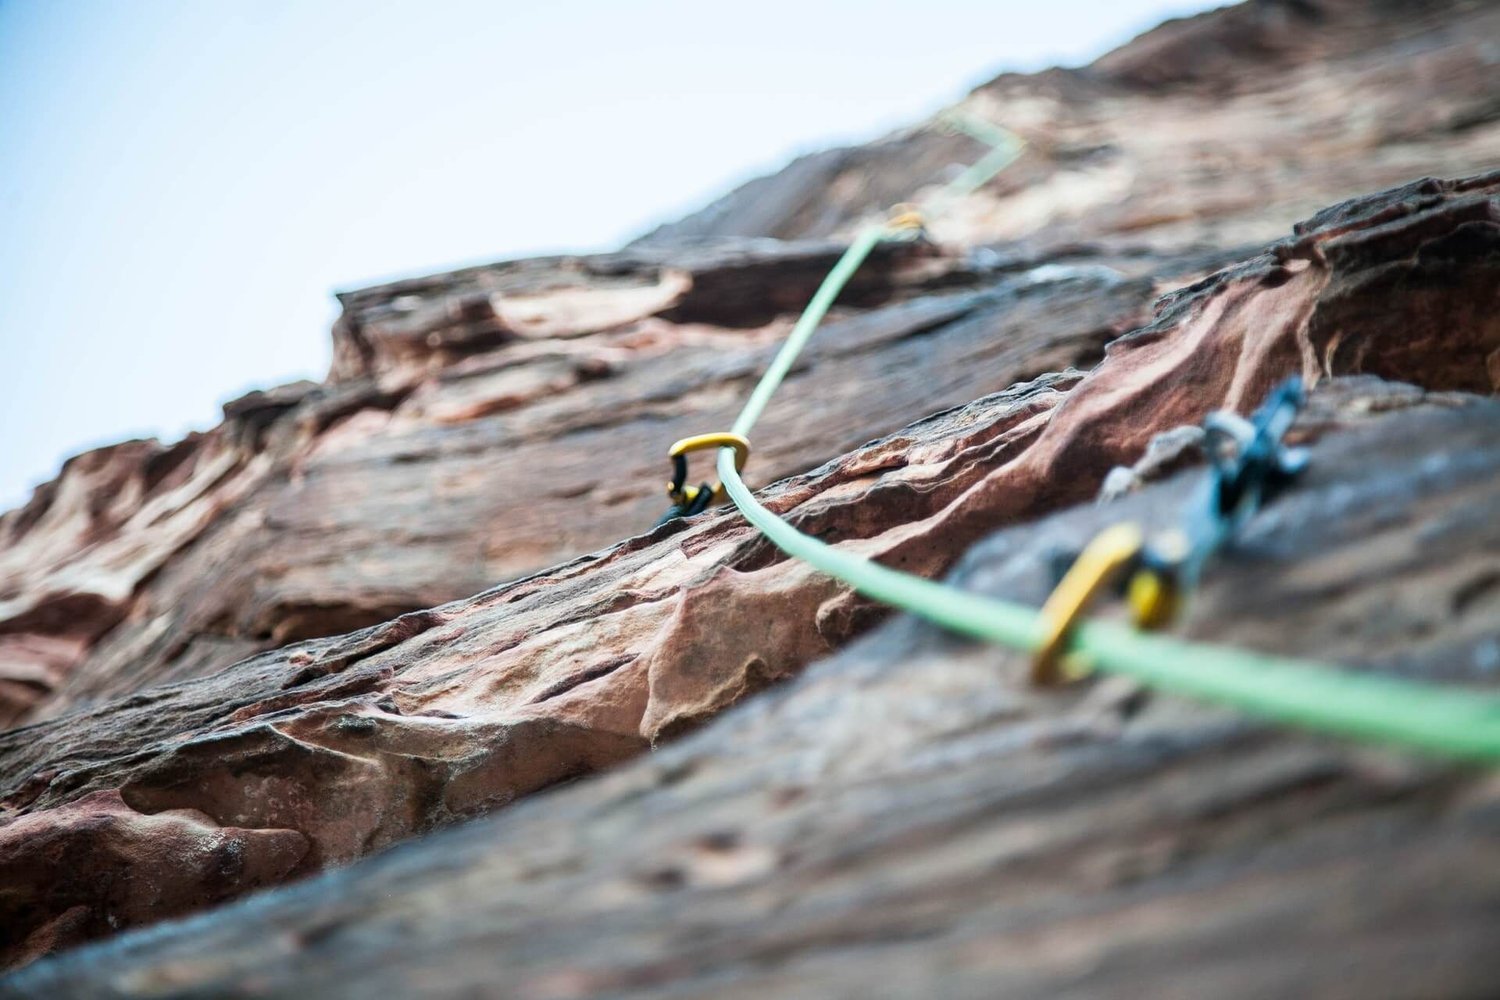 Rock climbing ropes against a rockface